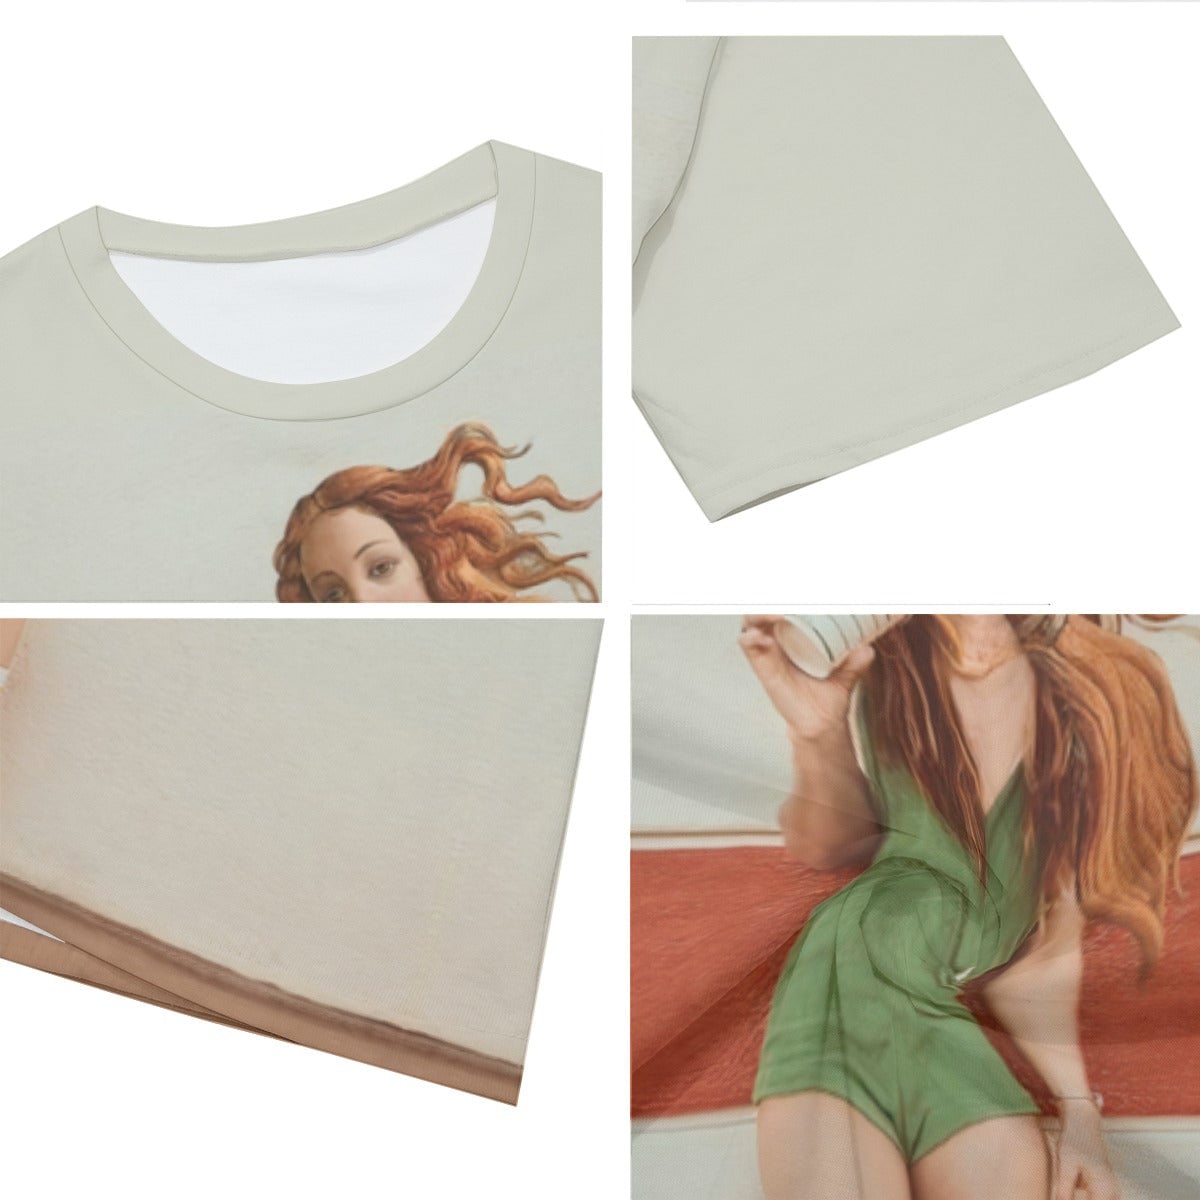 The Most Iconic Sandro Botticelli Venus T-Shirt